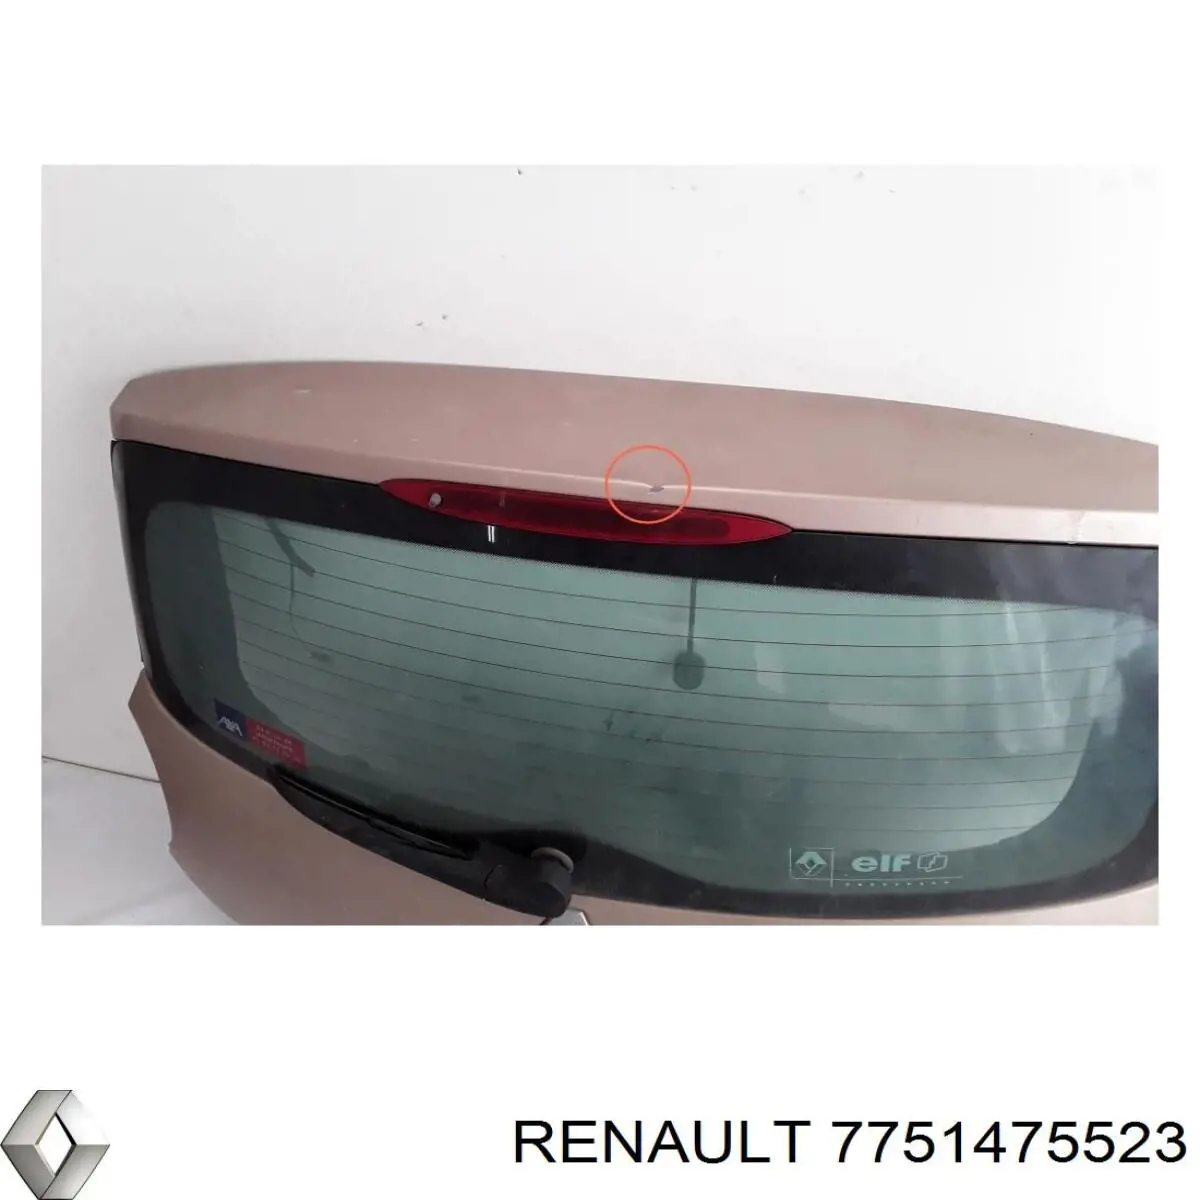 7751475523 Renault (RVI) puerta del maletero, trasera